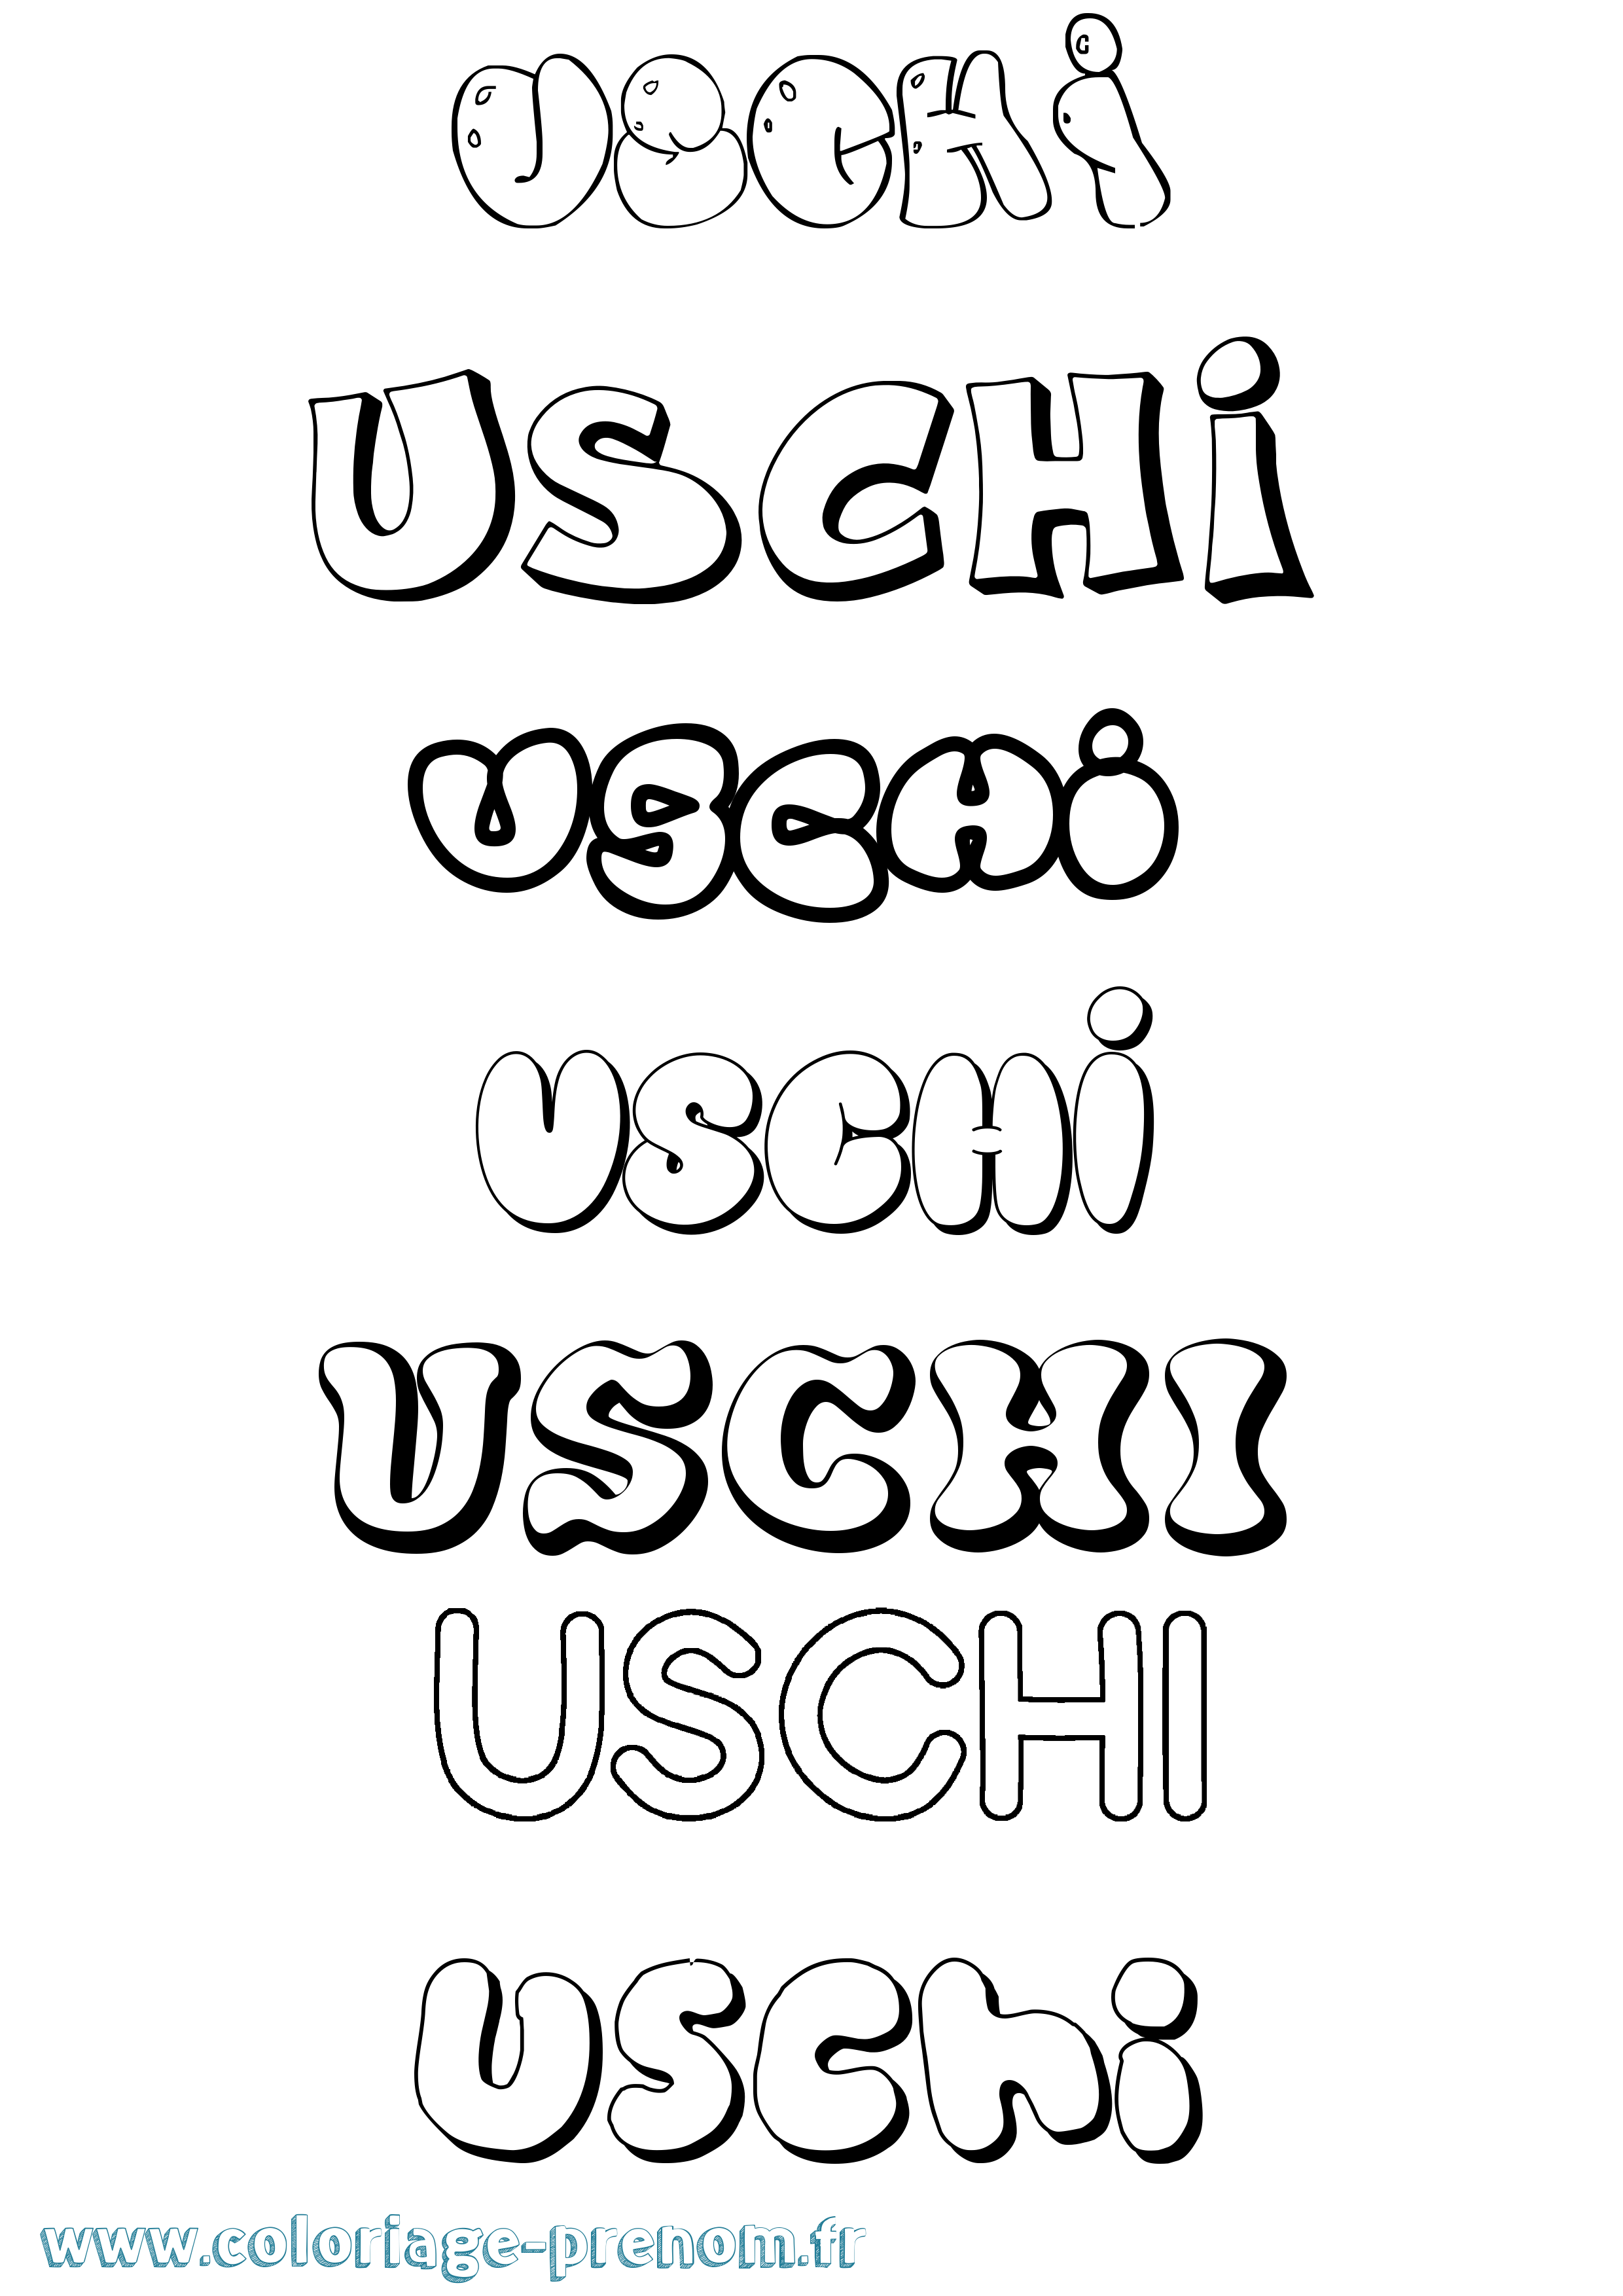 Coloriage prénom Uschi Bubble